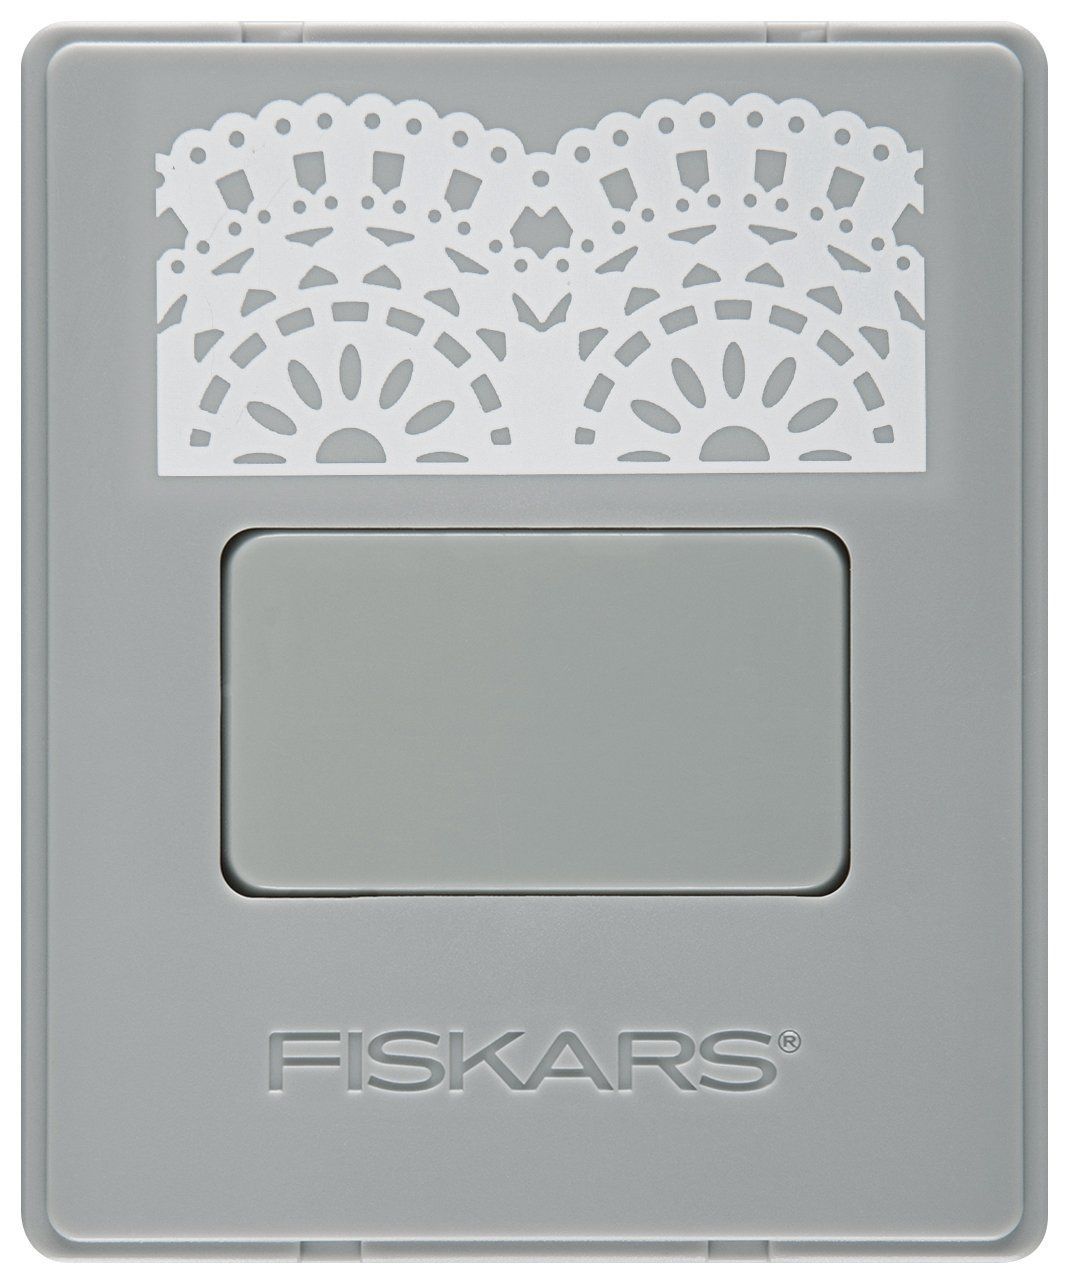 Fiskars 105700-1002 Antique Lace Large Punch Cartridge For AdvantEdge System